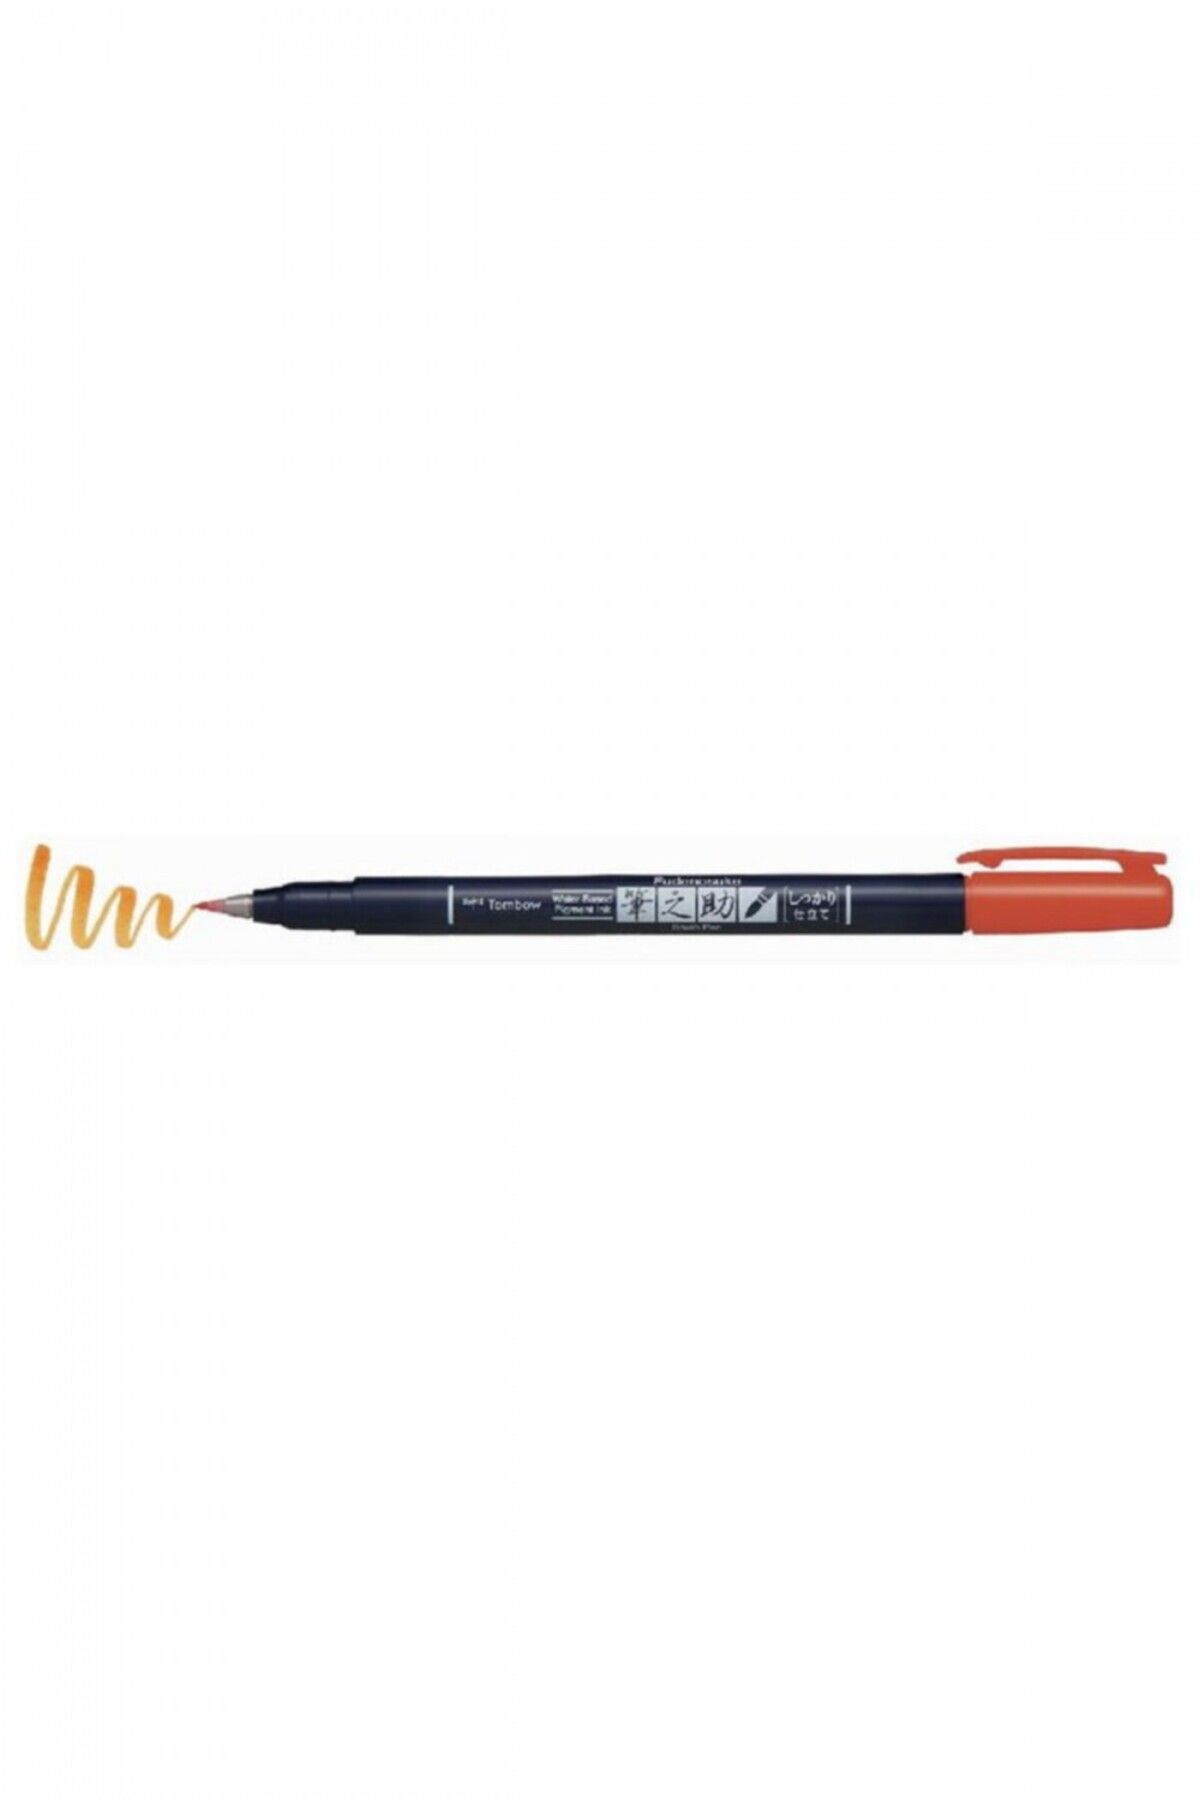 Tombow Fudenosuke Brush Pen Fırça Uçlu Kalem Sert Uç - Turuncu